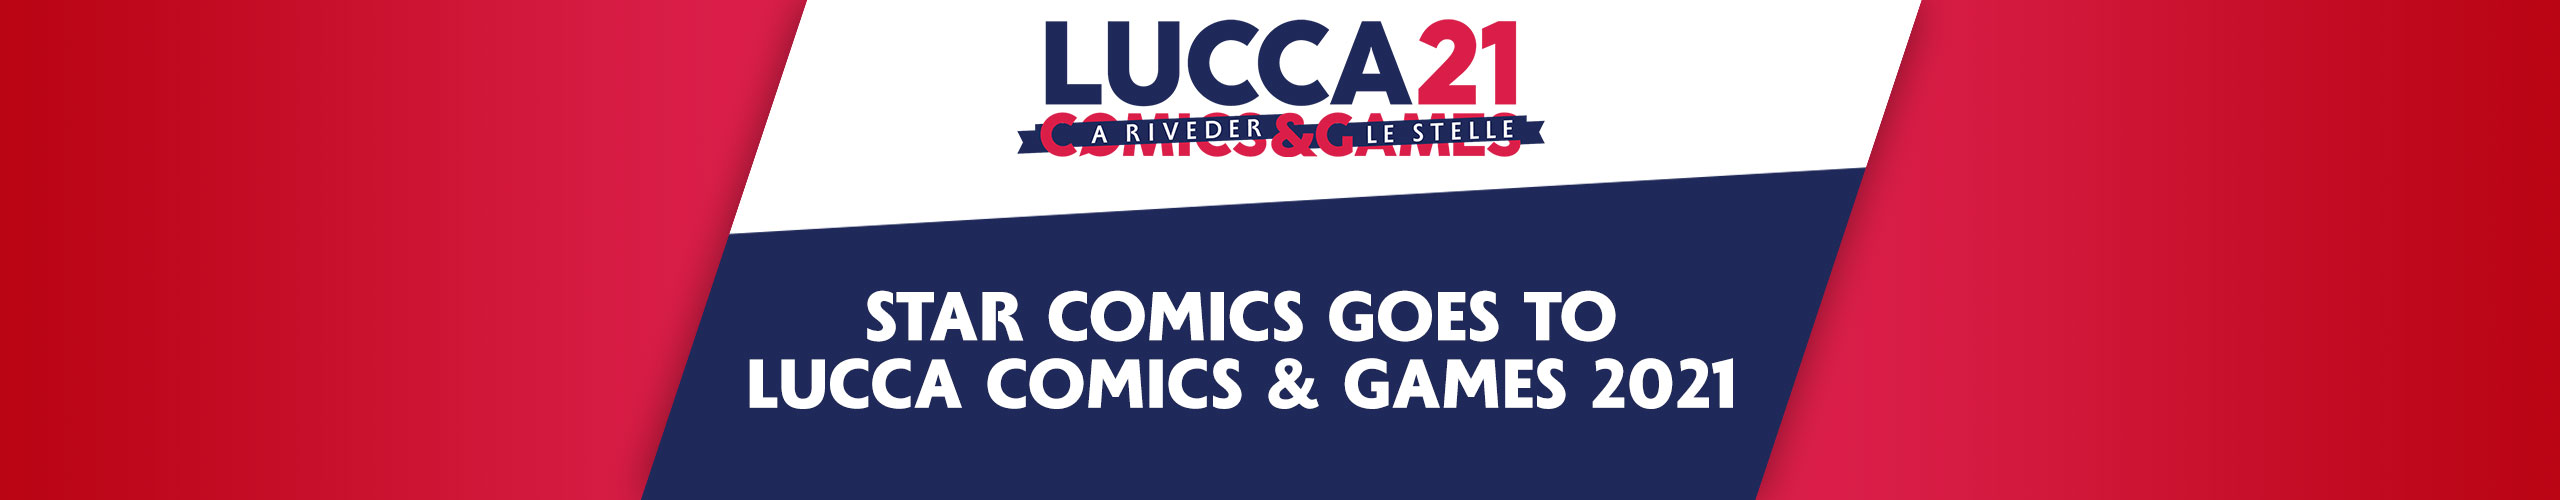 STAR COMICS GOES TO LUCCA COMICS & GAMES 2021